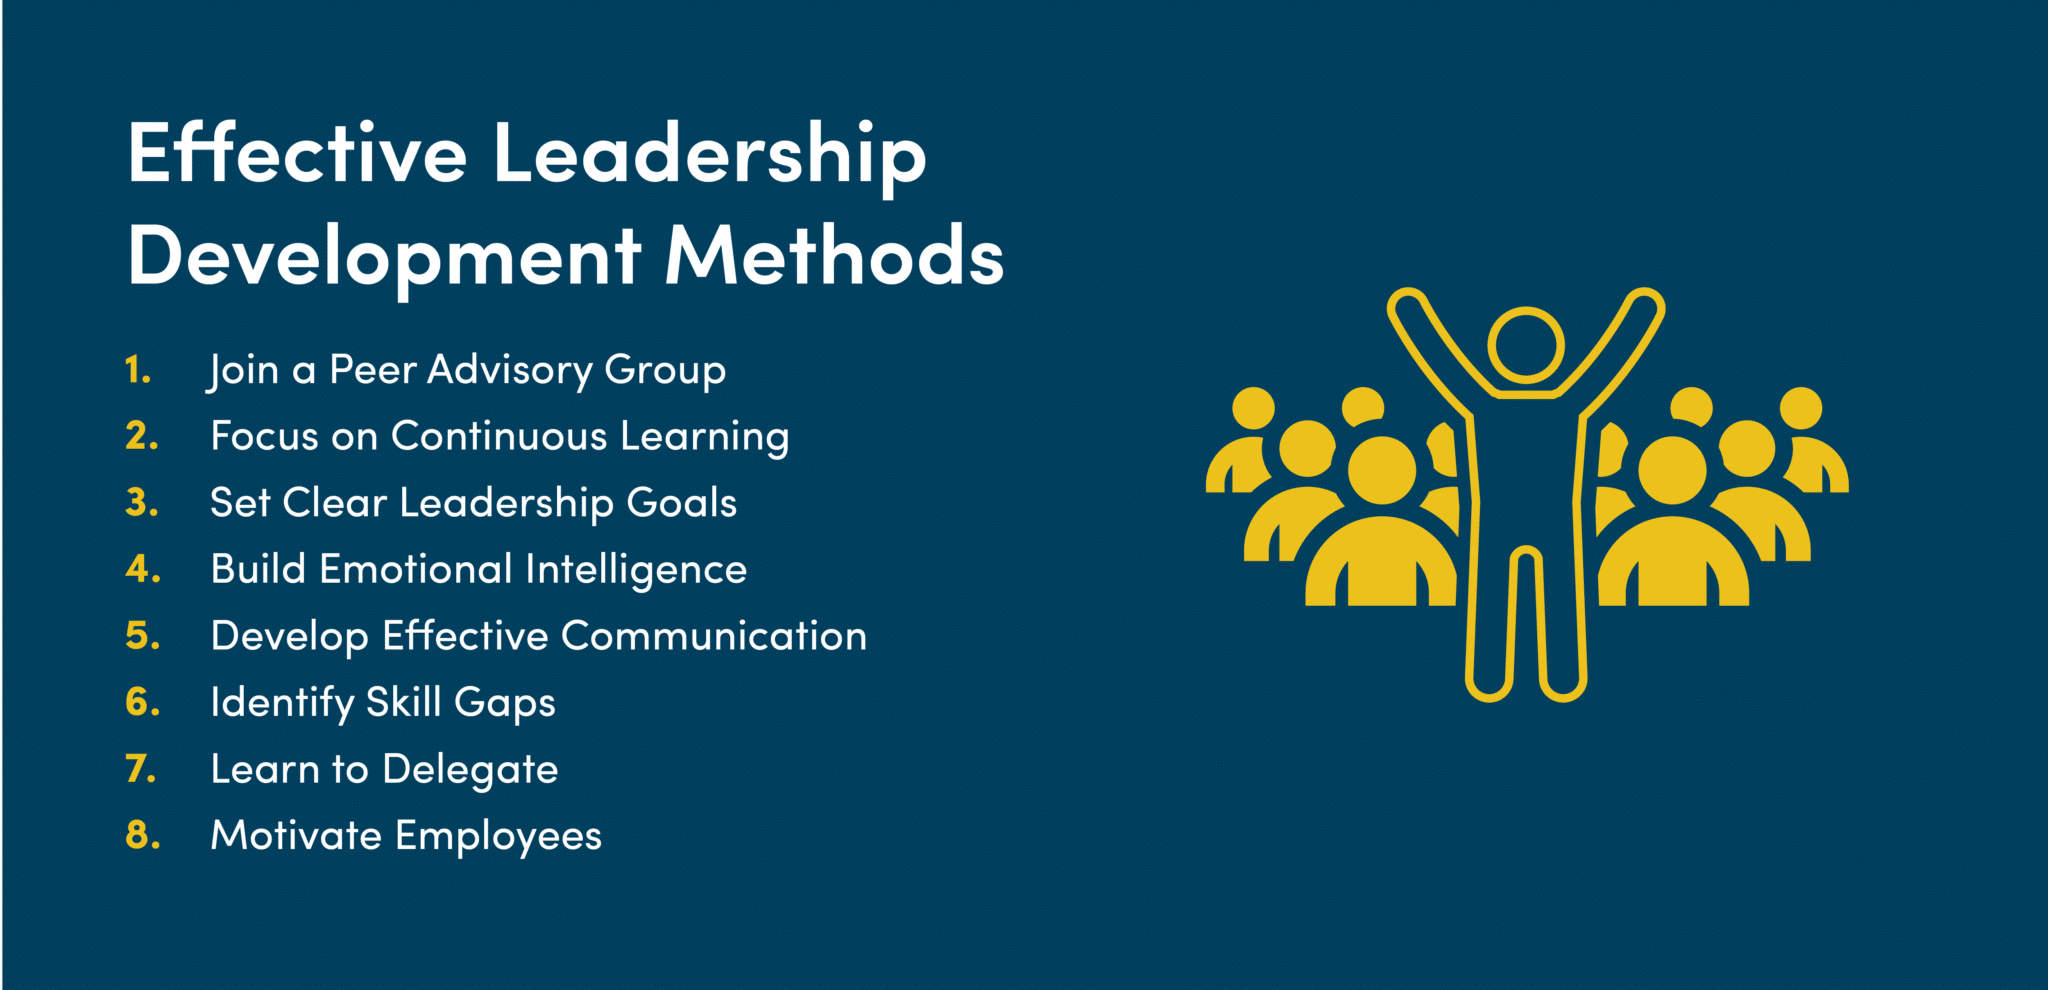 Effective leadership development methods